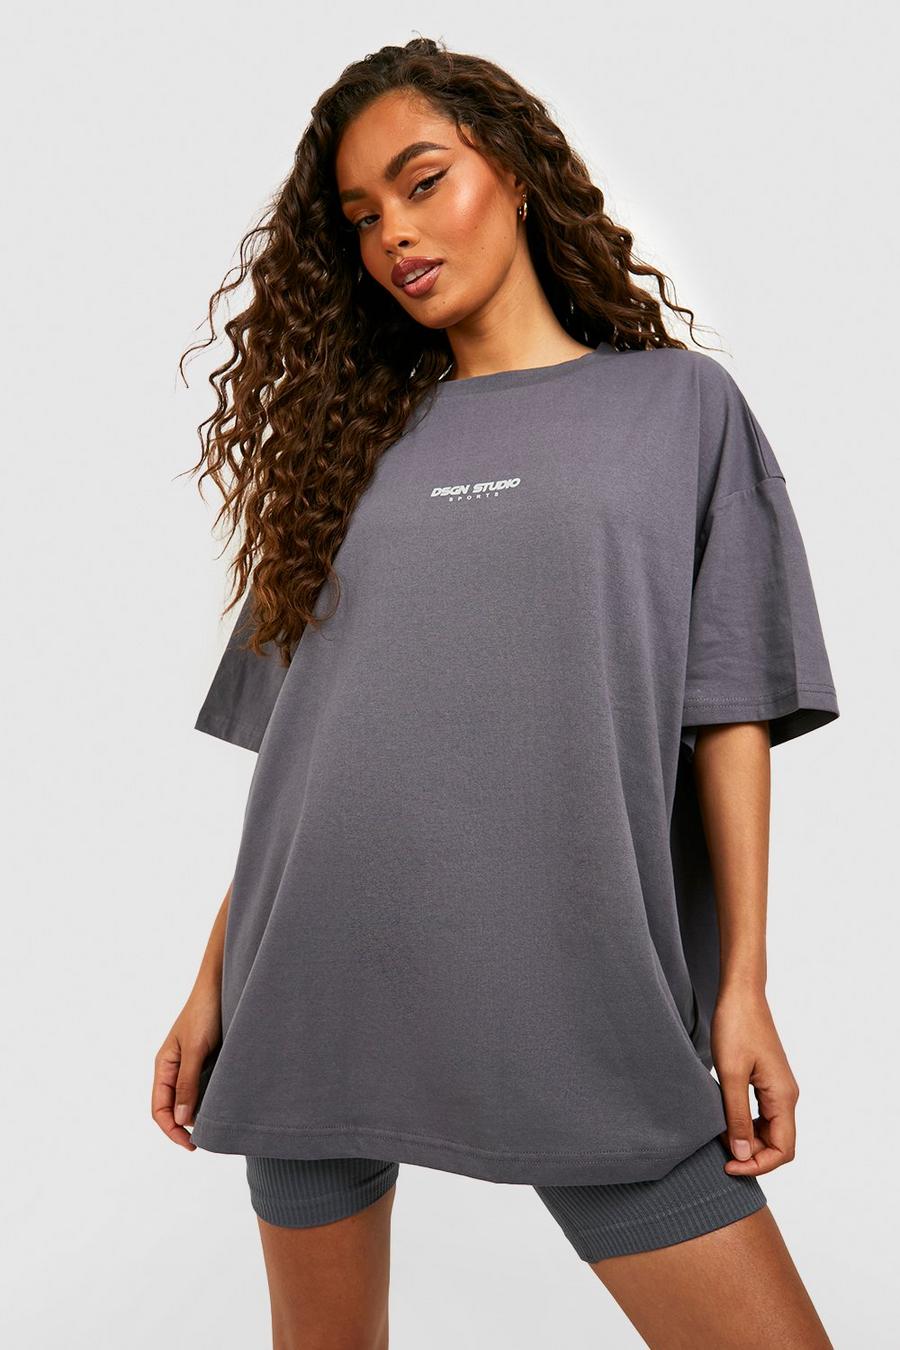 T-shirt oversize à slogan Dsgn Studio, Charcoal image number 1